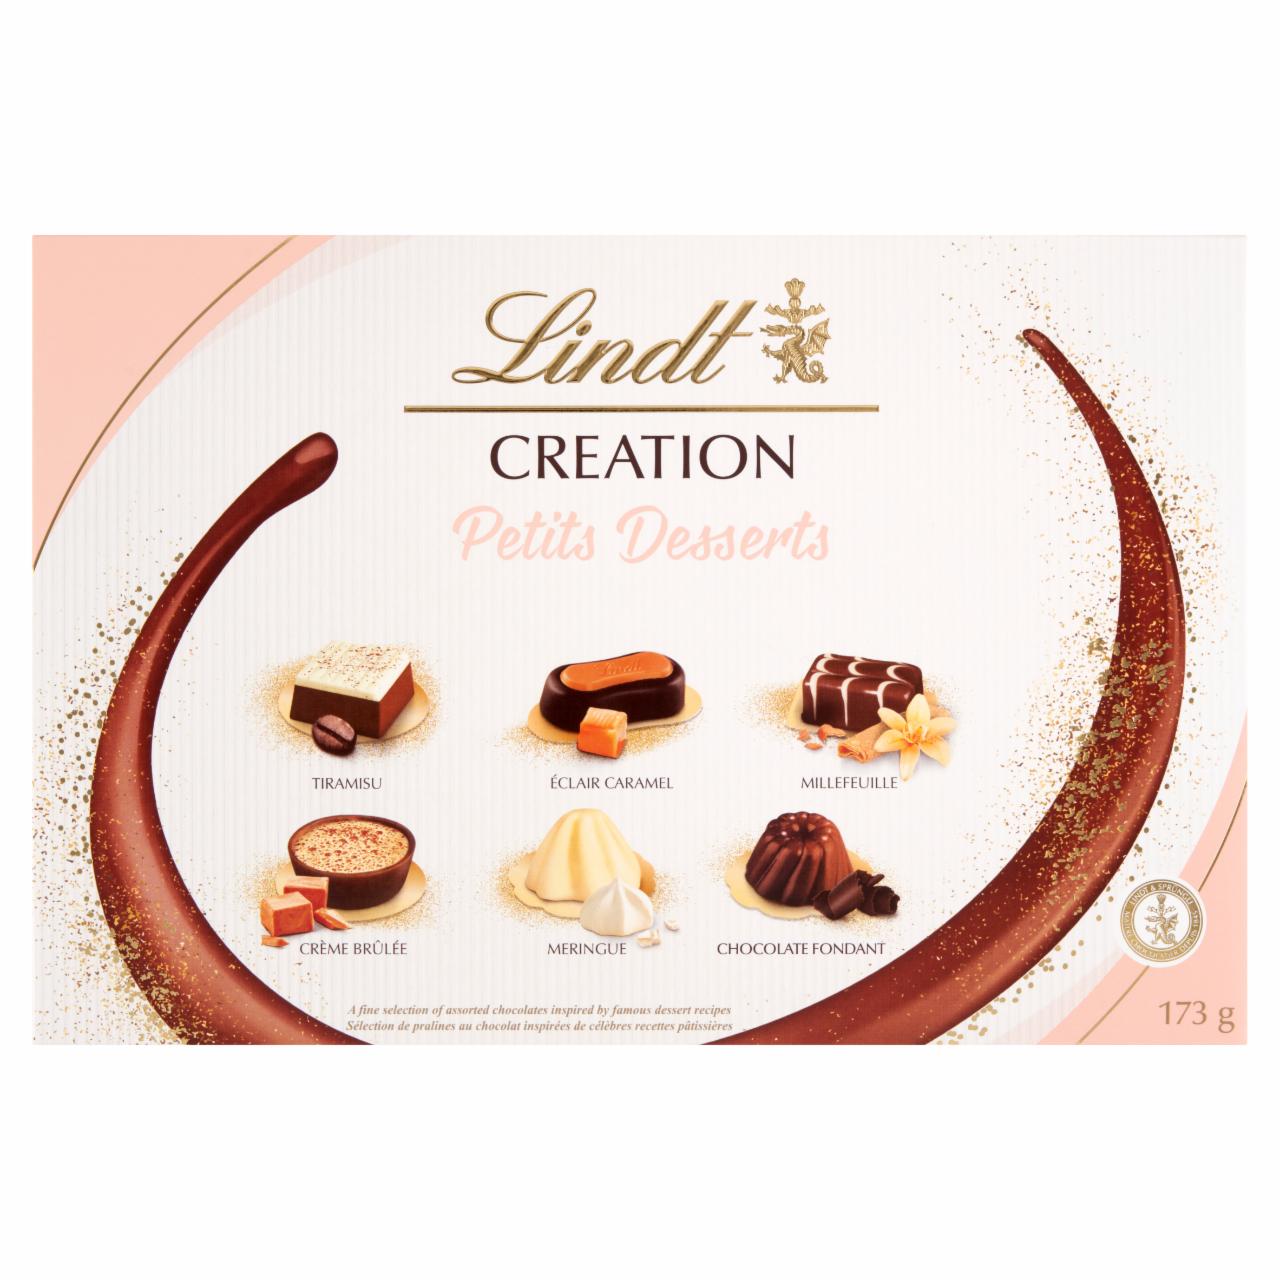 Zdjęcia - Lindt Creation Petits Desserts Asortyment pralin z czekolady 173 g (18 sztuk)